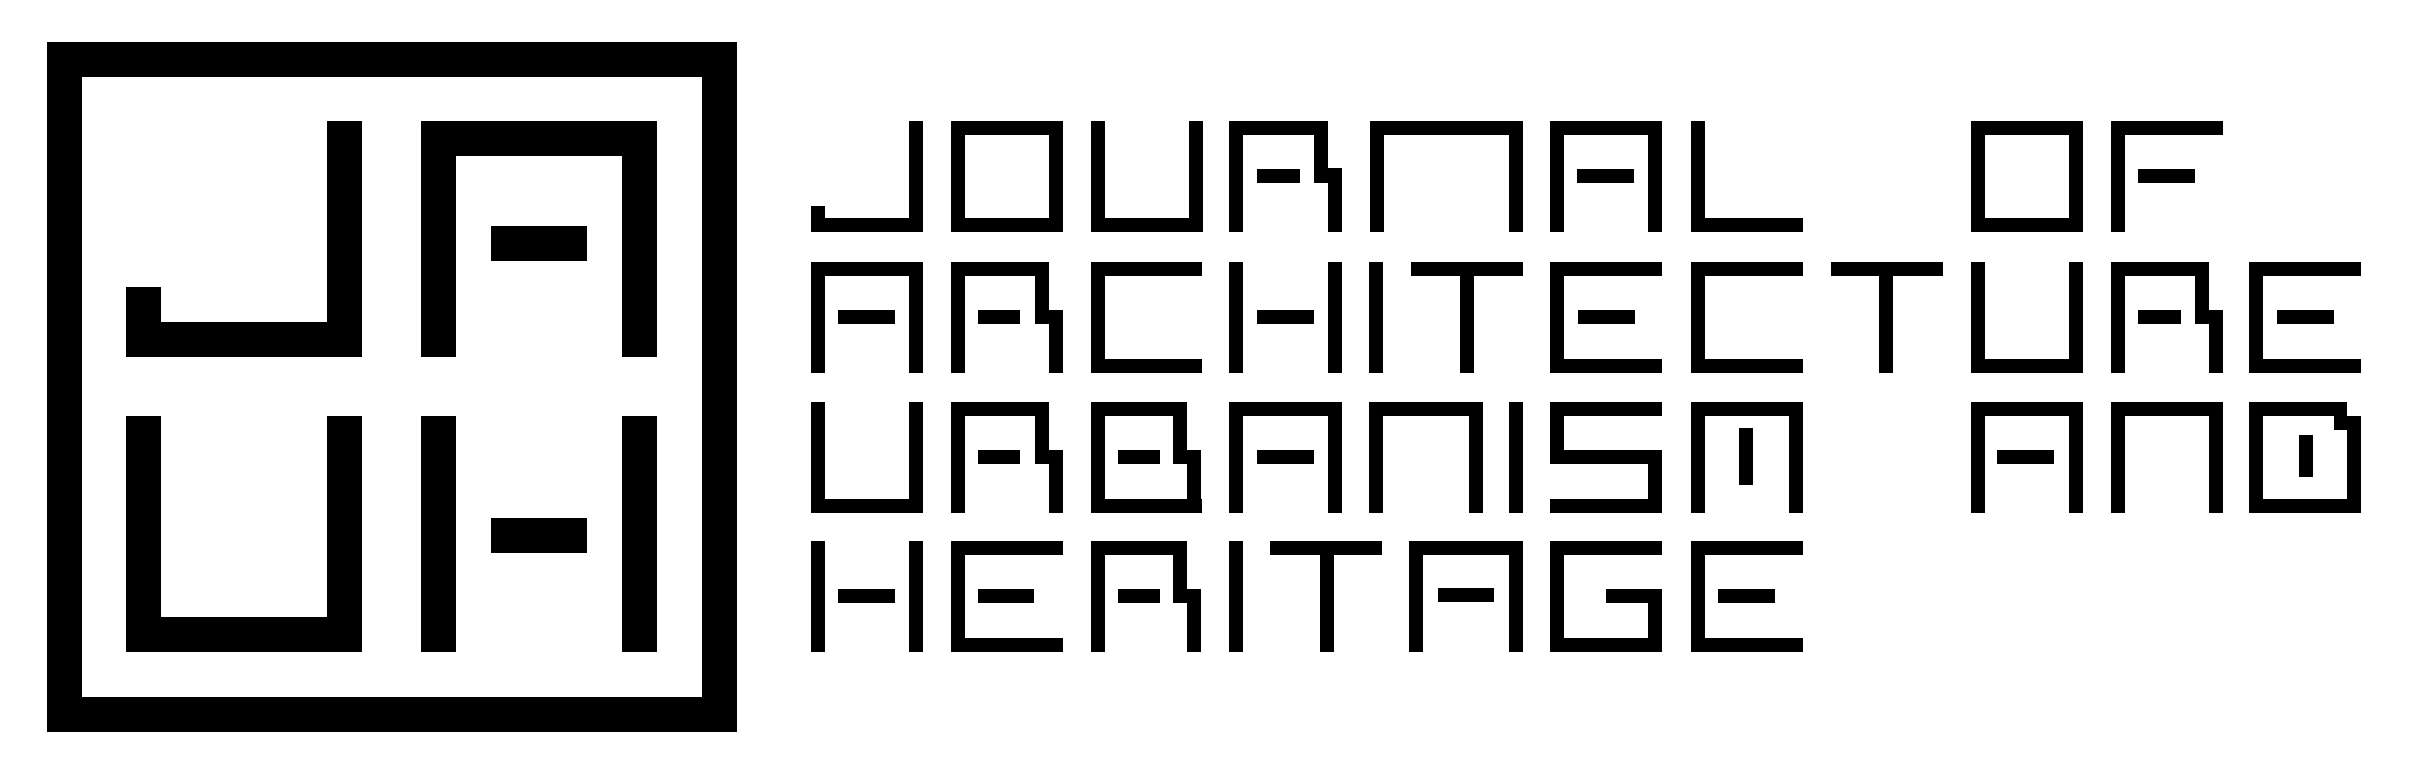 Journal Logo corect